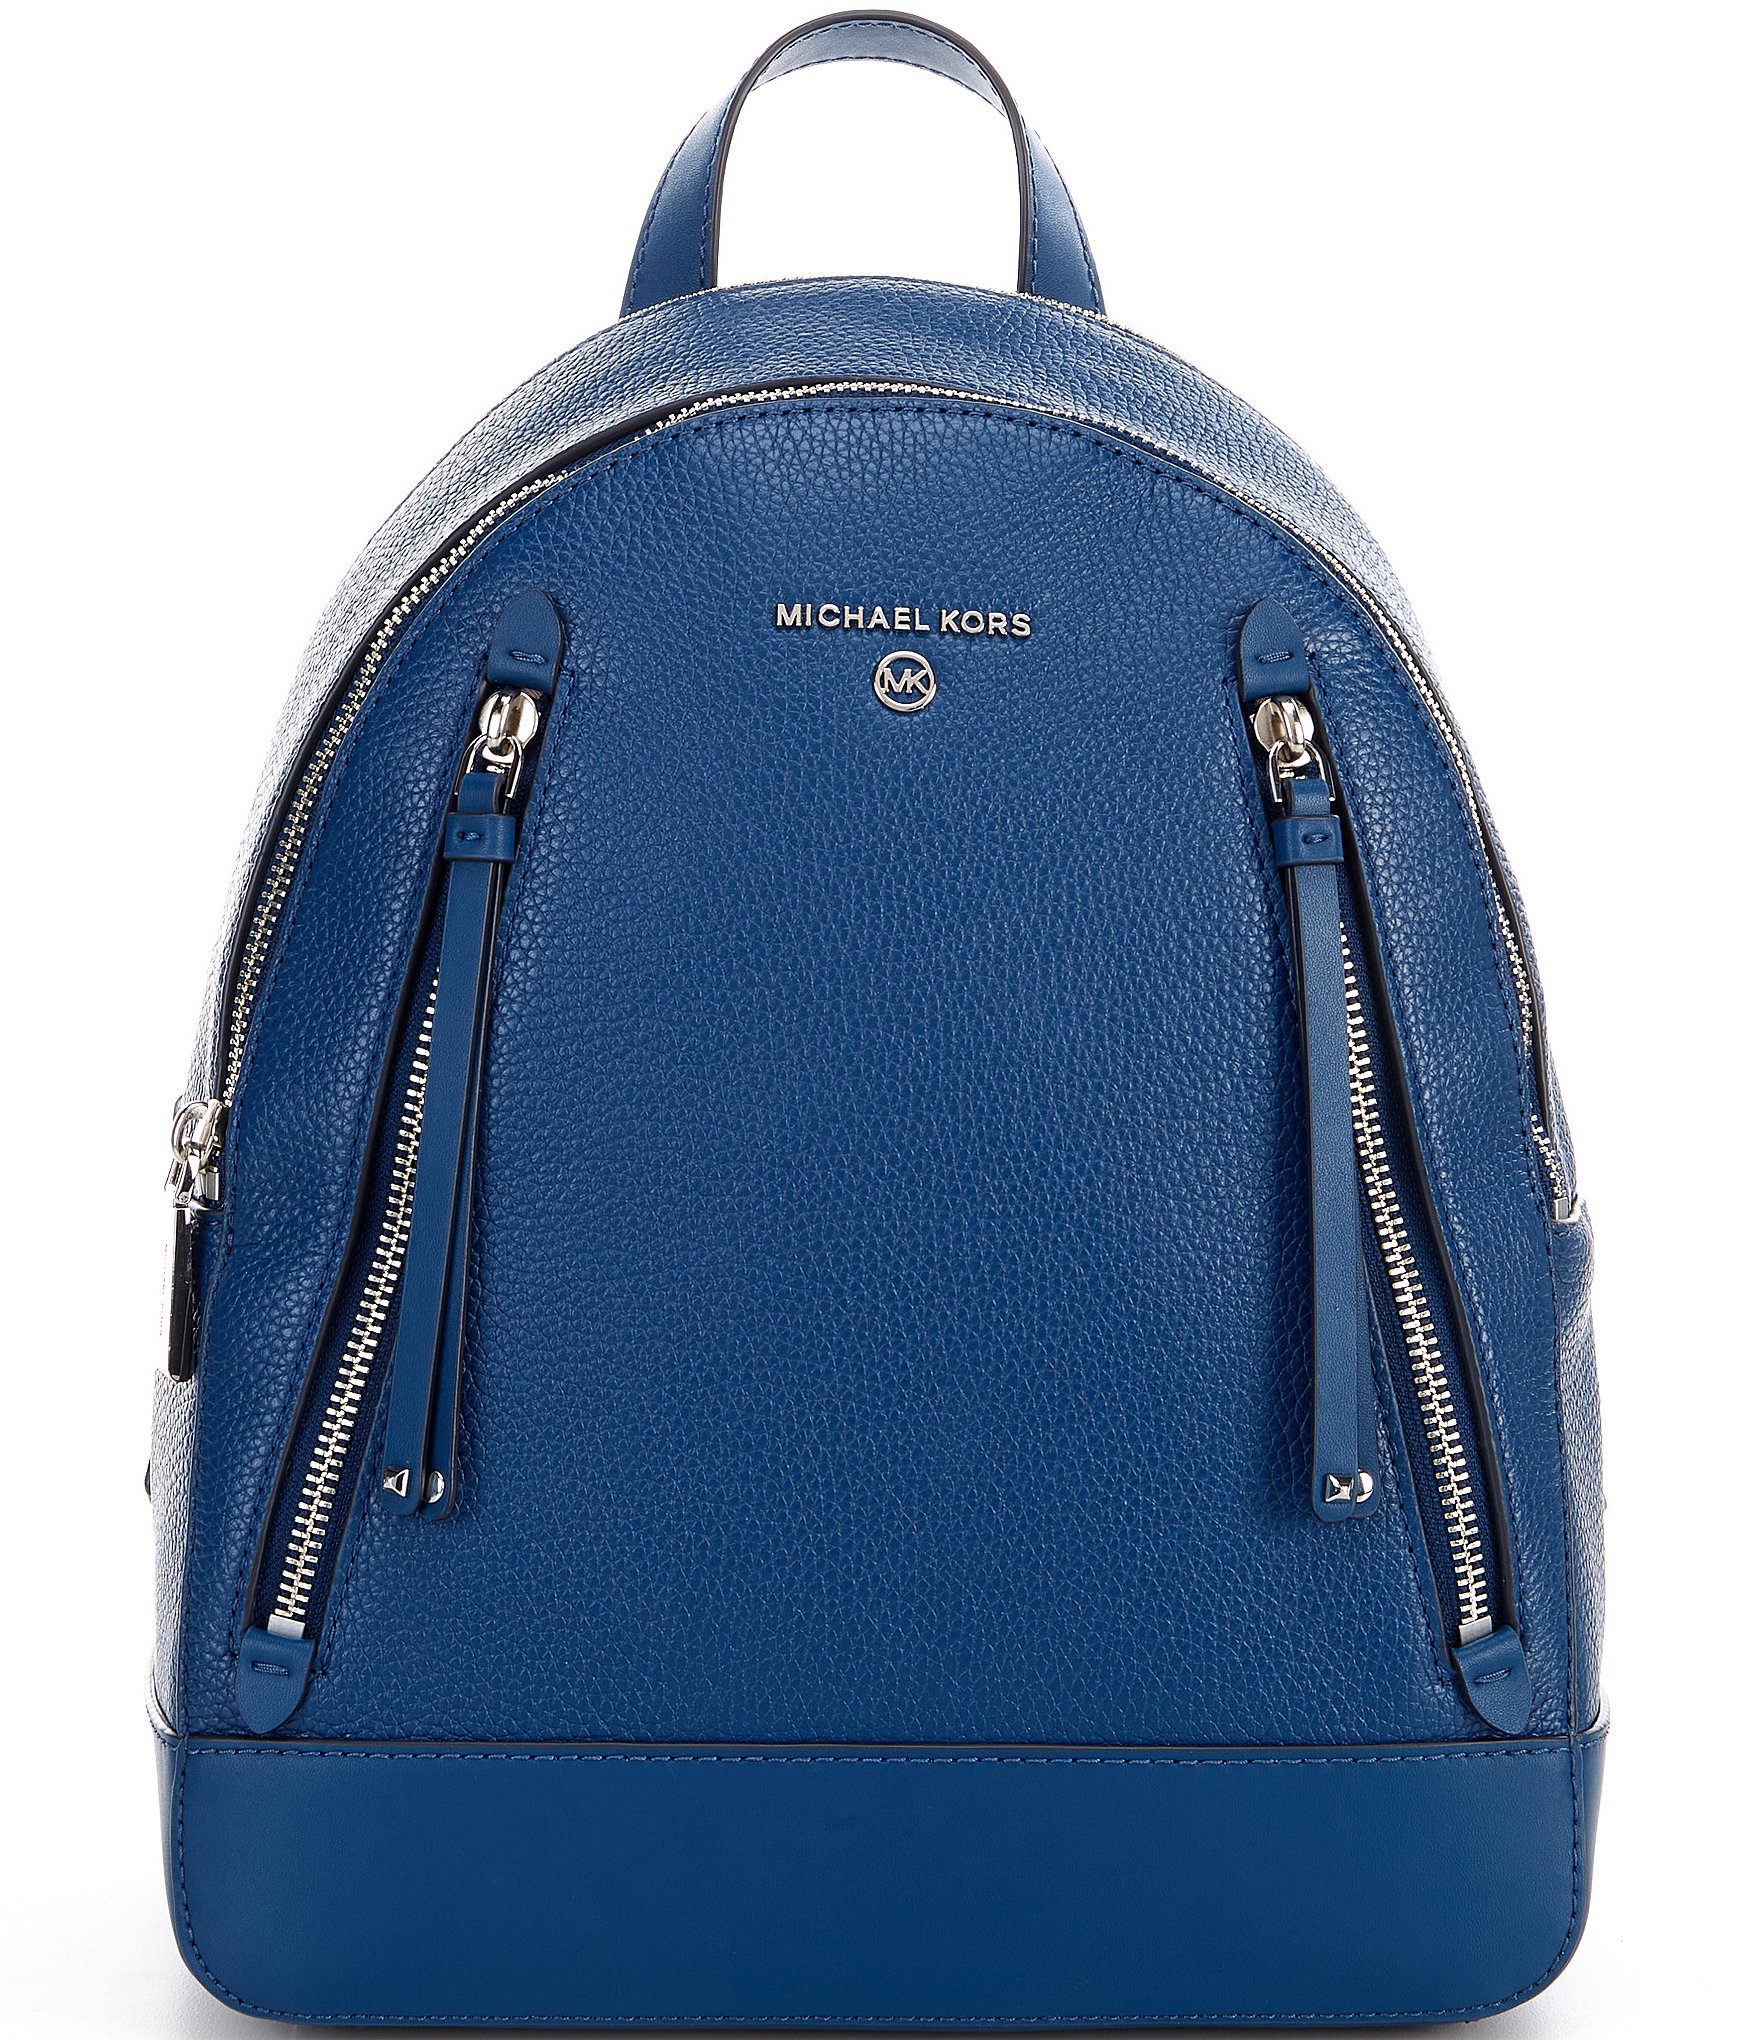 michael kors clearance purses: Women's Backpacks | Dillard's